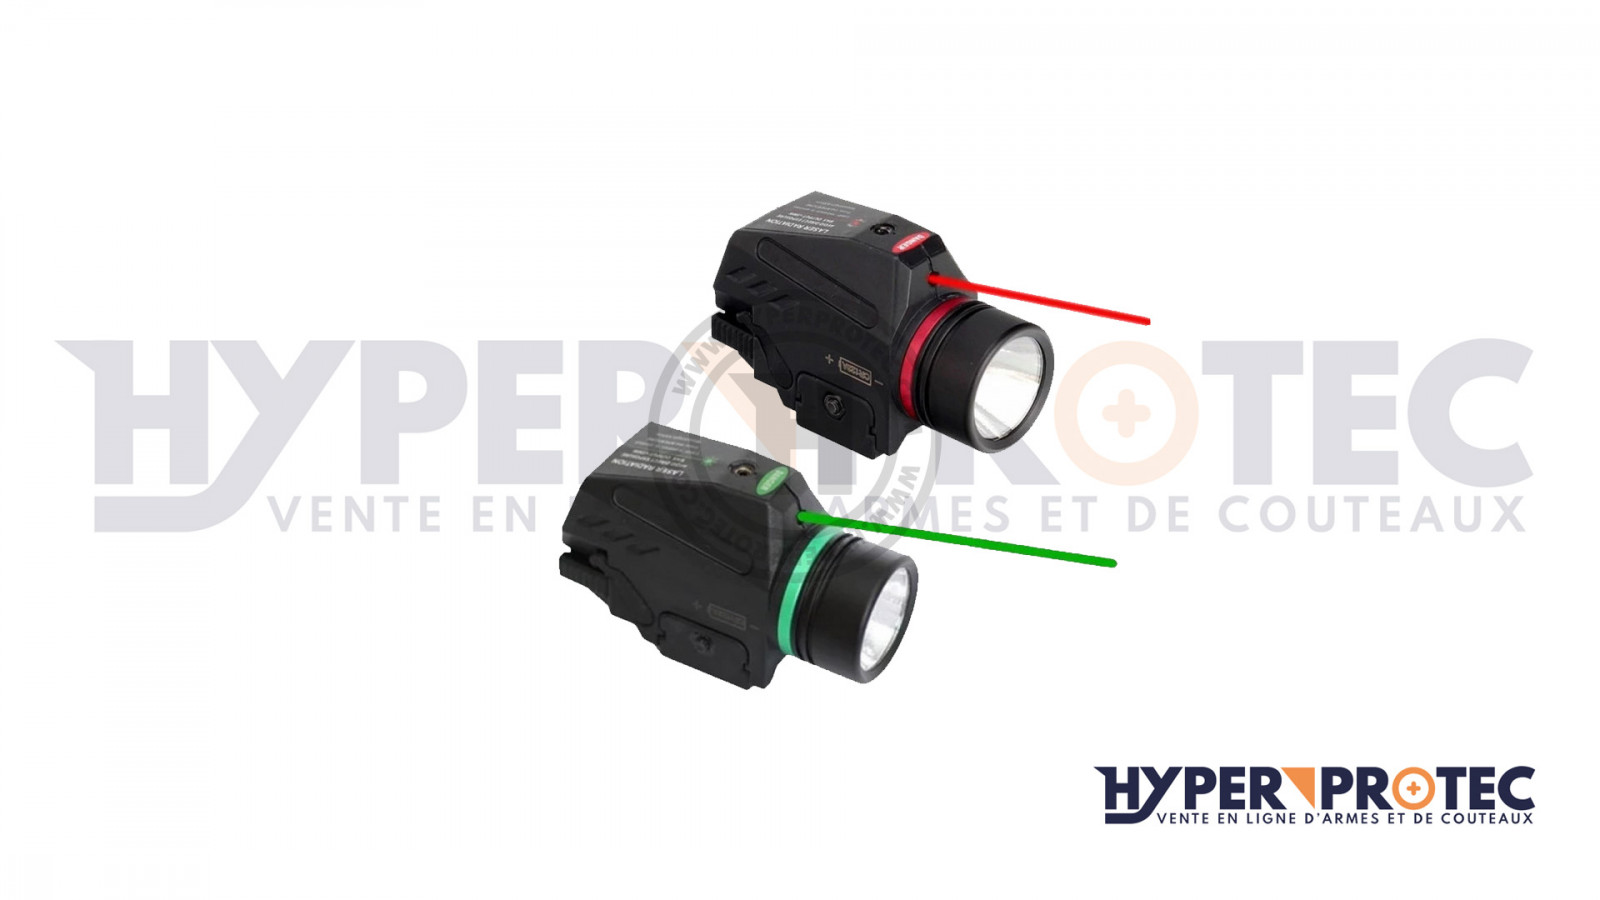 LAMPE LASER 6 LED rail picatinny - Lasers, pointeurs et lampes